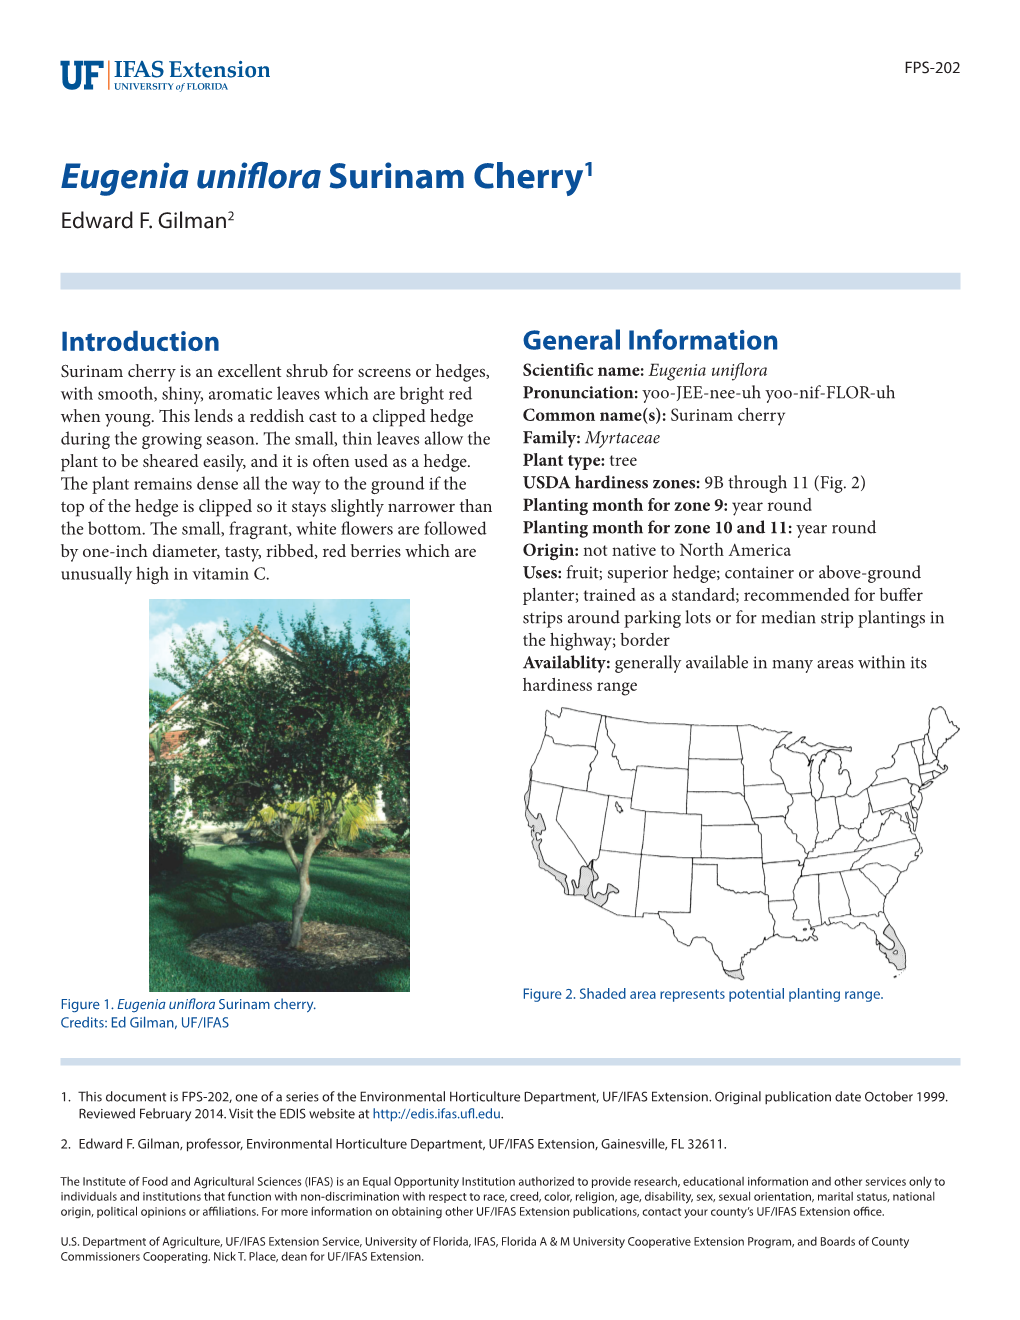 Eugenia Uniflora Surinam Cherry1 Edward F